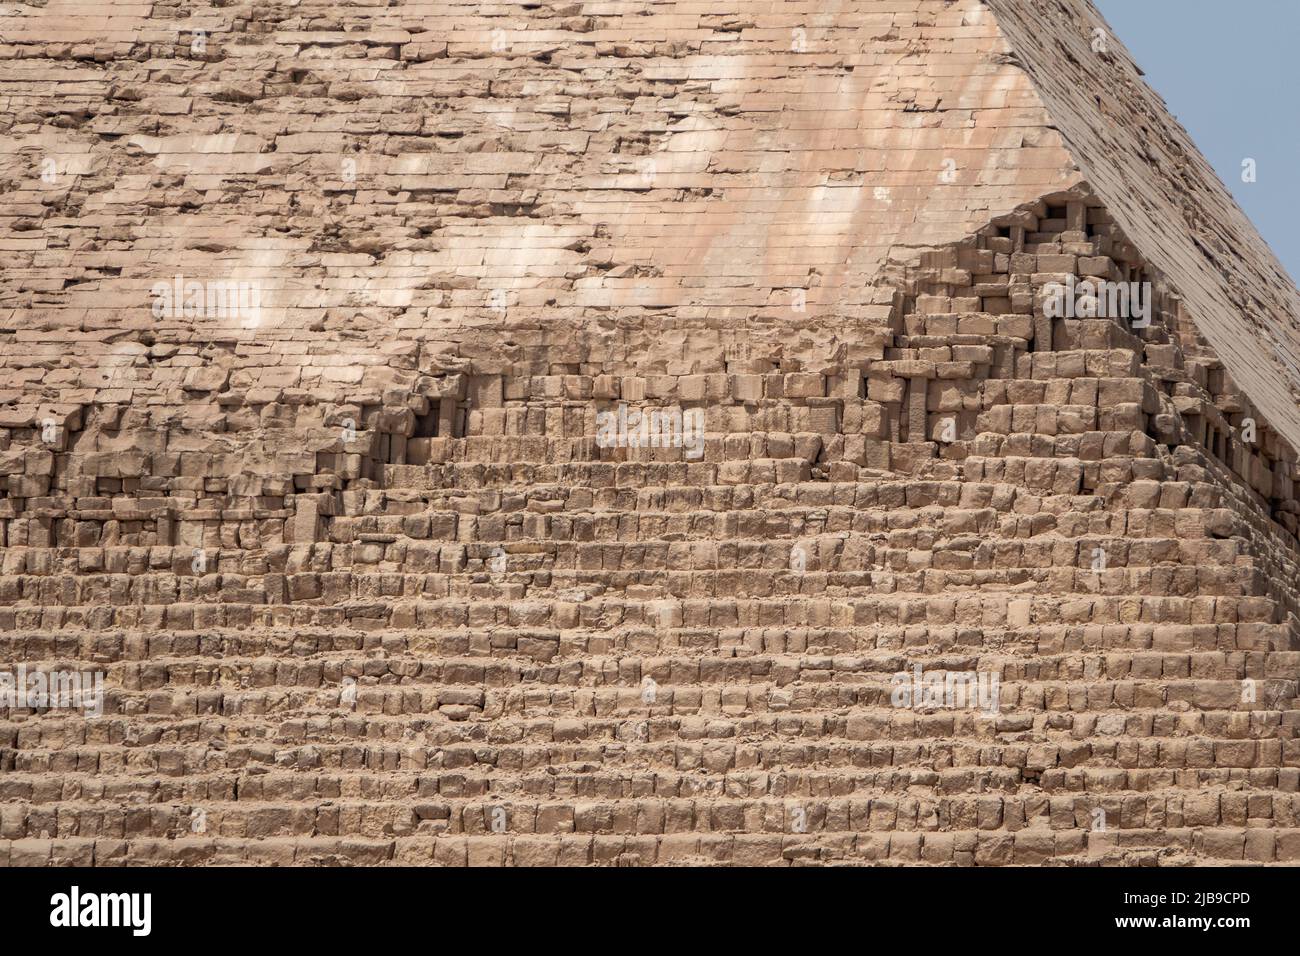 Close up of Limestone casing on peak of Pyramid of Khafre on the Giza plateau, the Great Pyramids of Giza, Cairo, Egypt Stock Photo